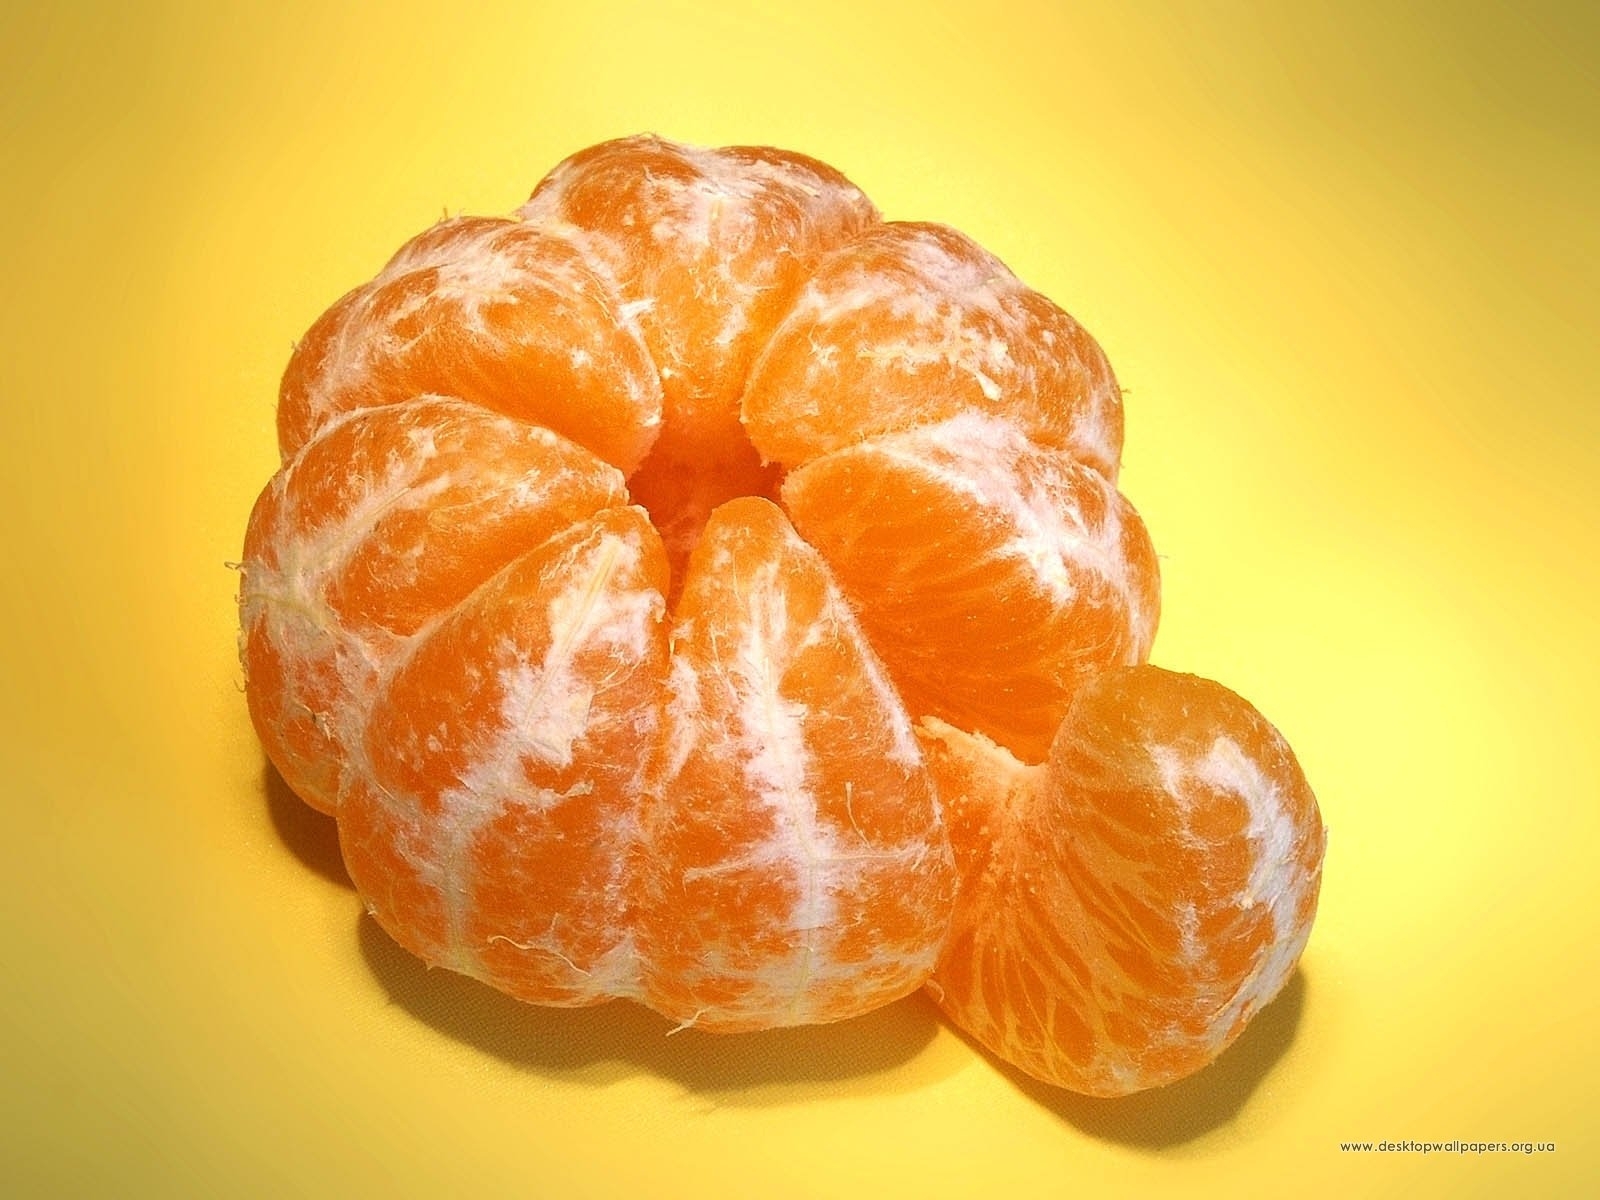 fruits, food, tangerines, orange wallpaper for mobile